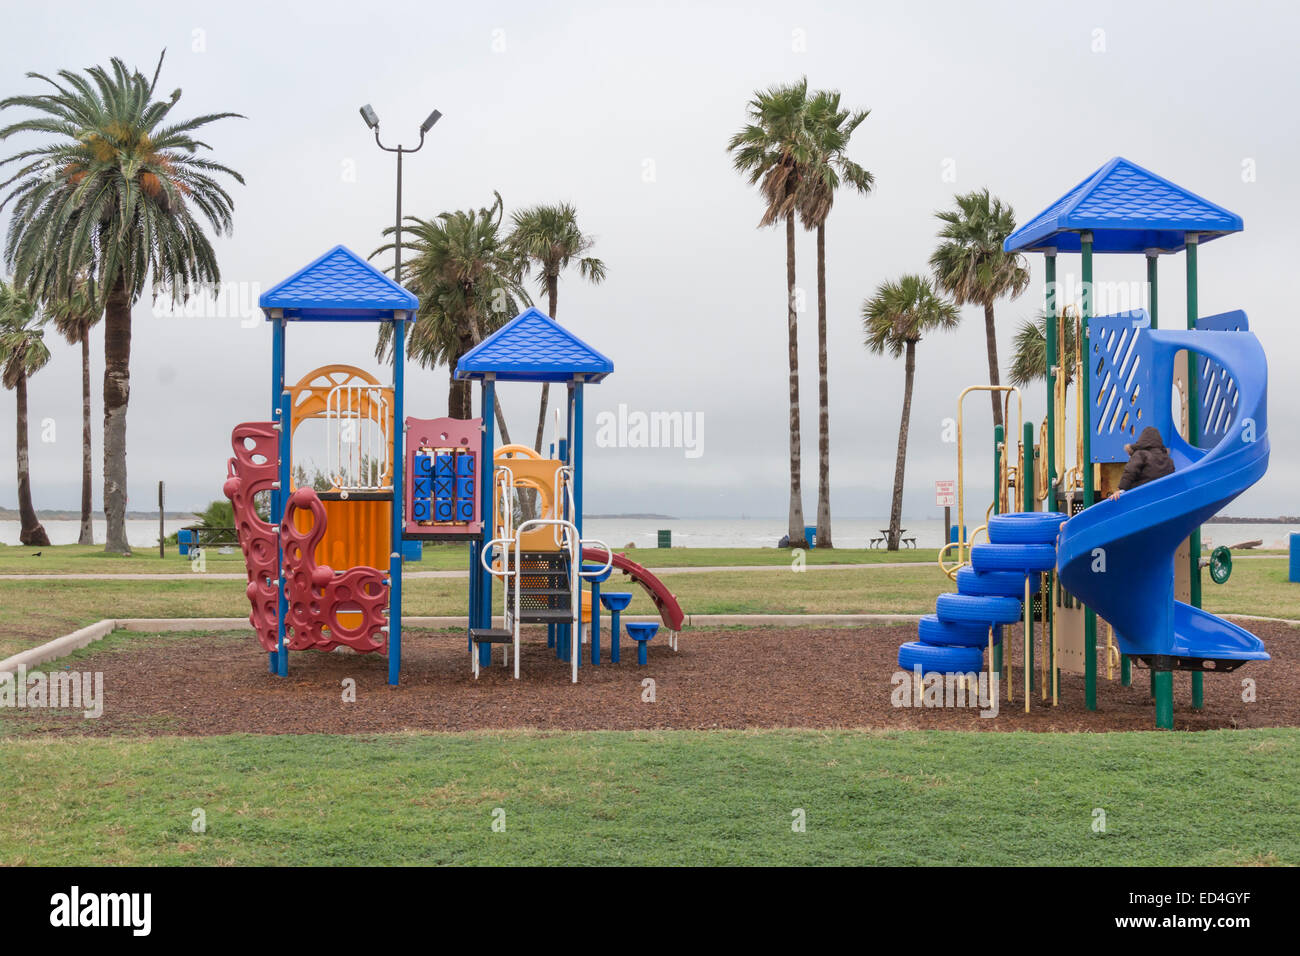 Children's playground at Seawolf Park on Pelican Island, Galveston, Texas. Stock Photo